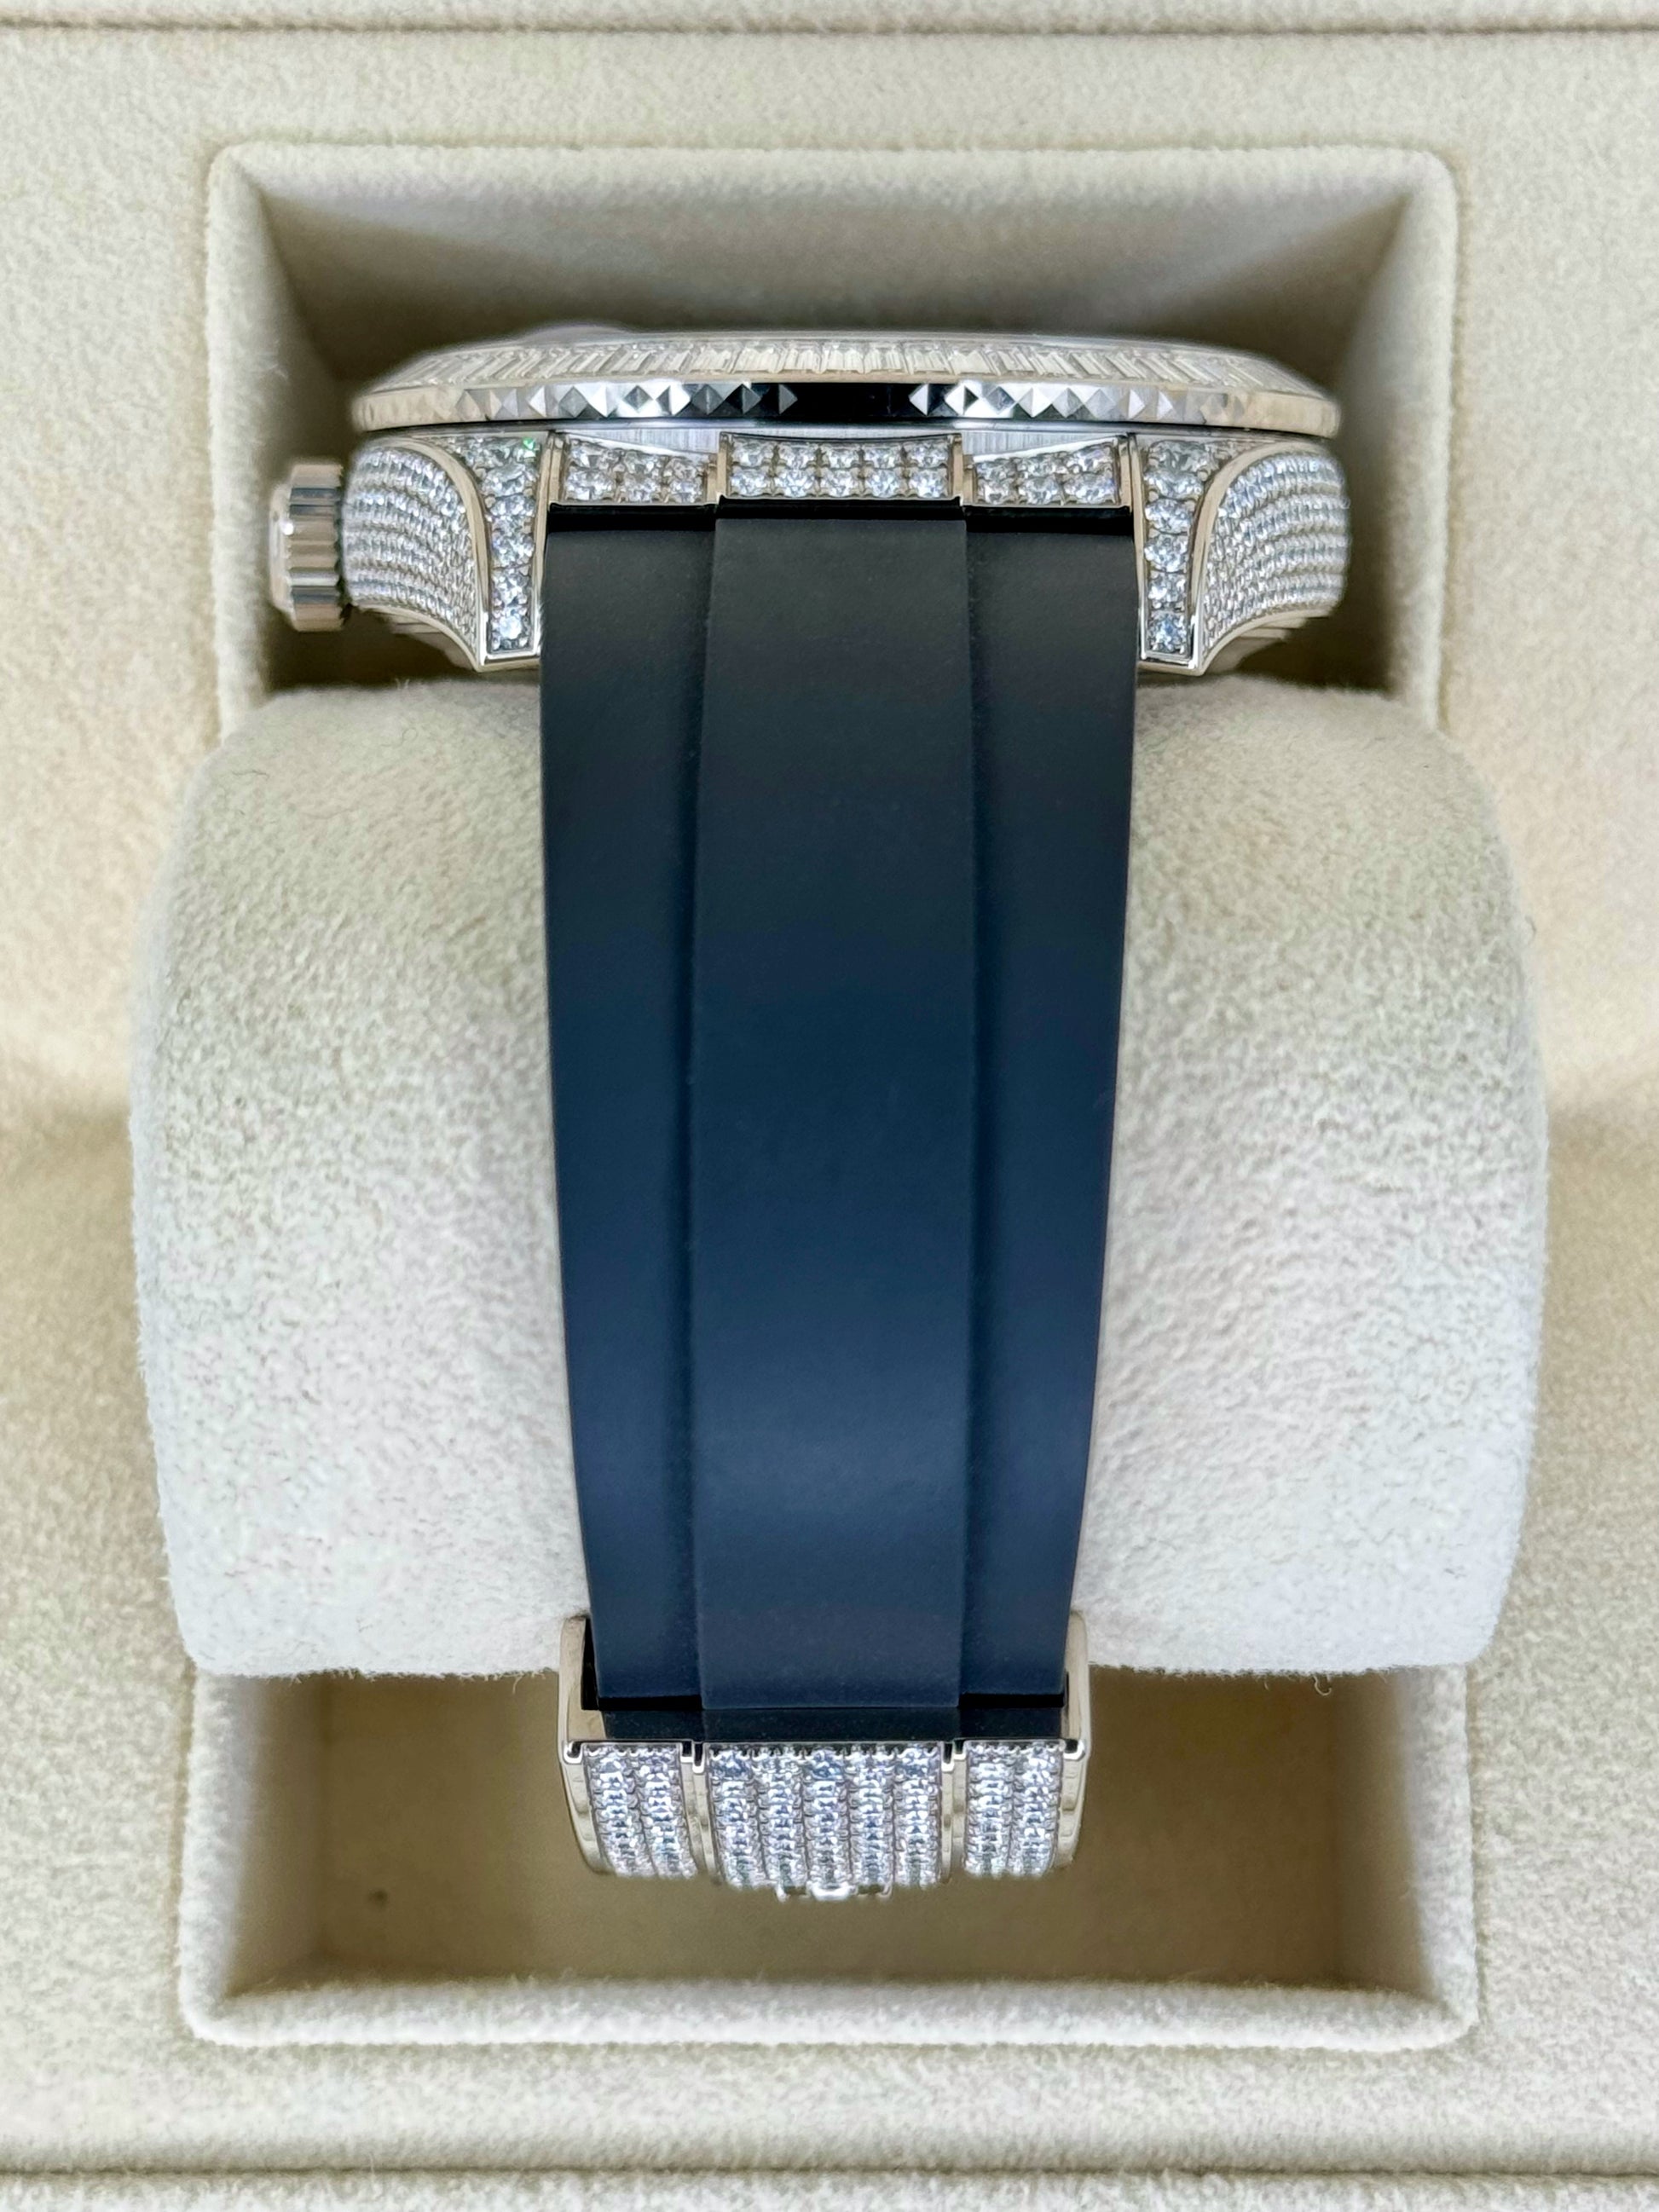 NEW 2023 Rolex Sky-Dweller Meteorite Diamond Watch 326259TBR - MyWatchLLC